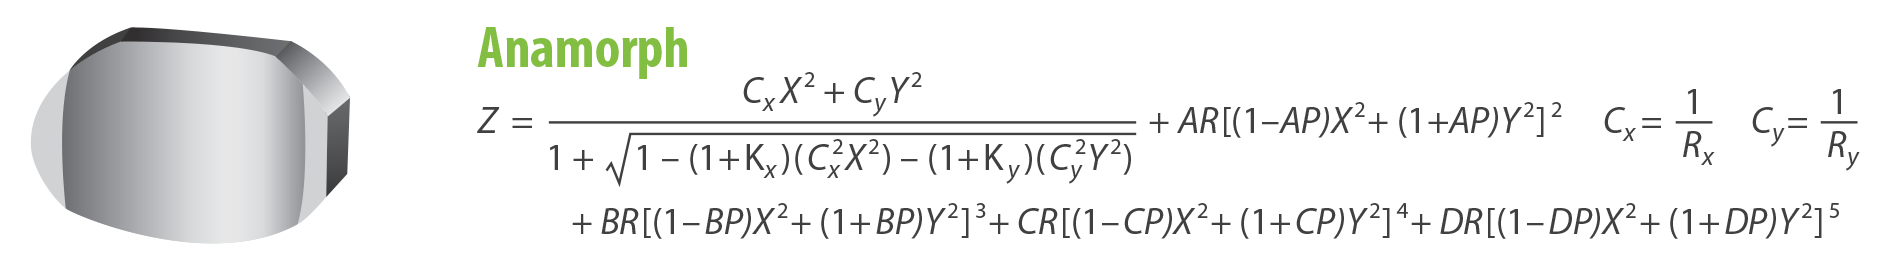 Anamorph formula